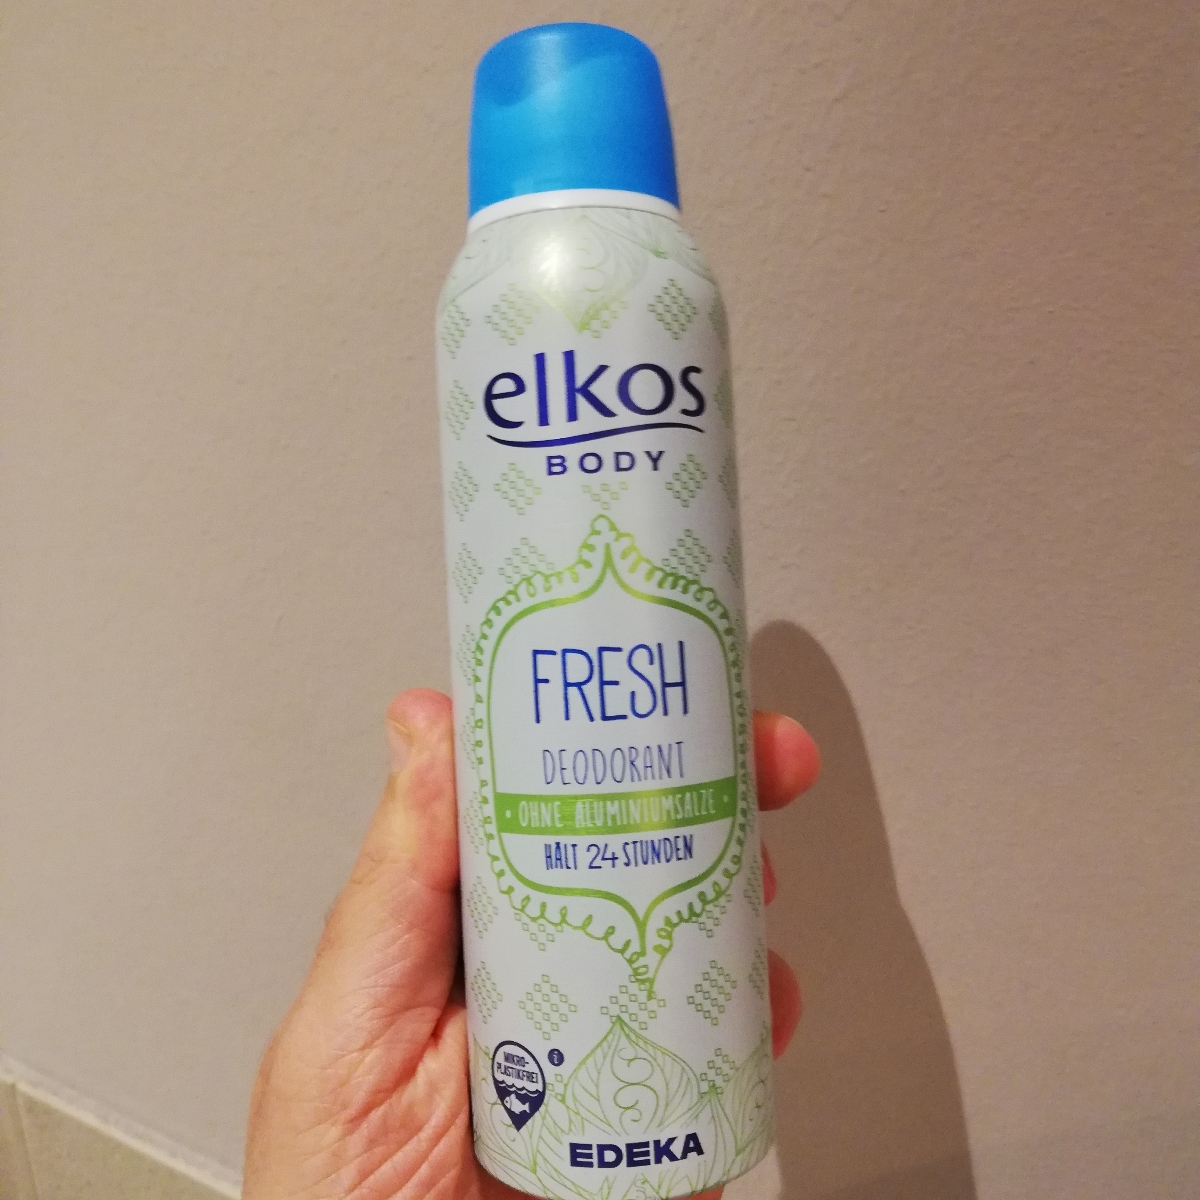 Elkos Body Fresh Deodorant Review